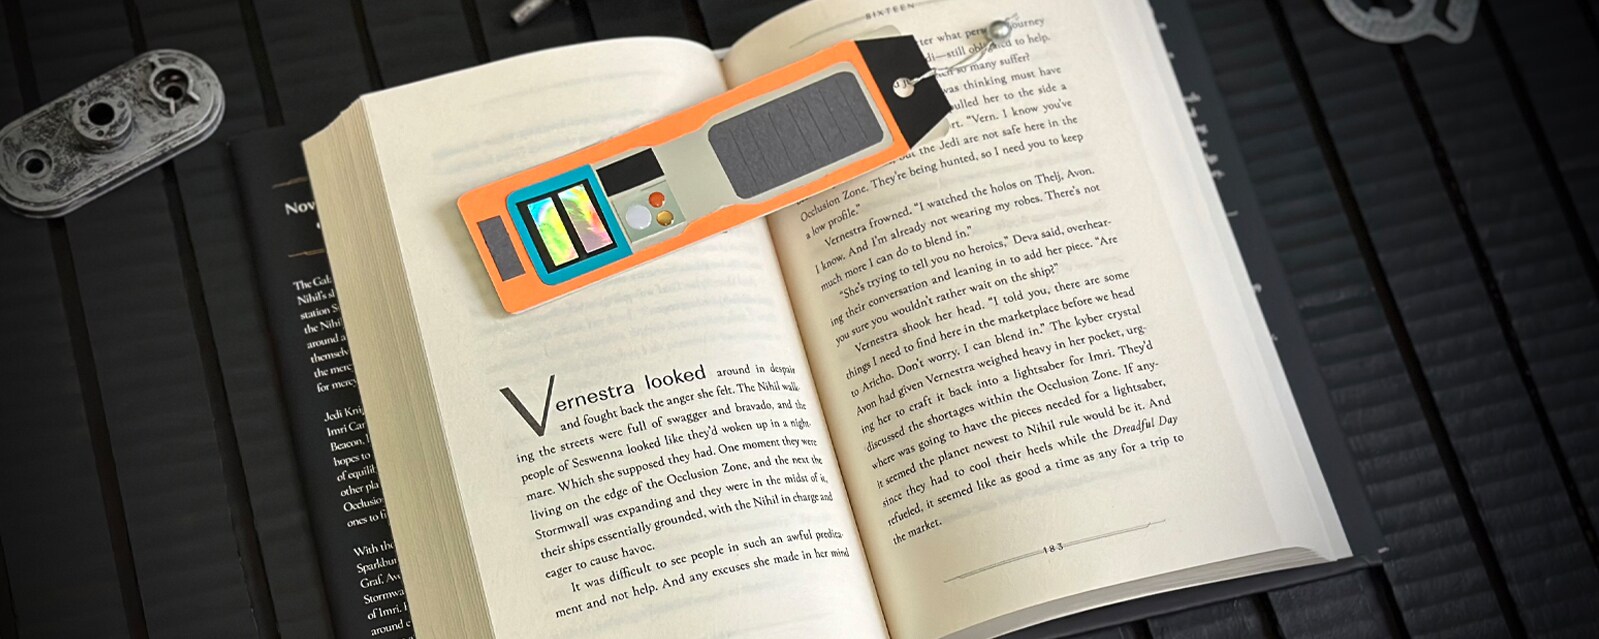 A Pip bookmark on a High Republic book